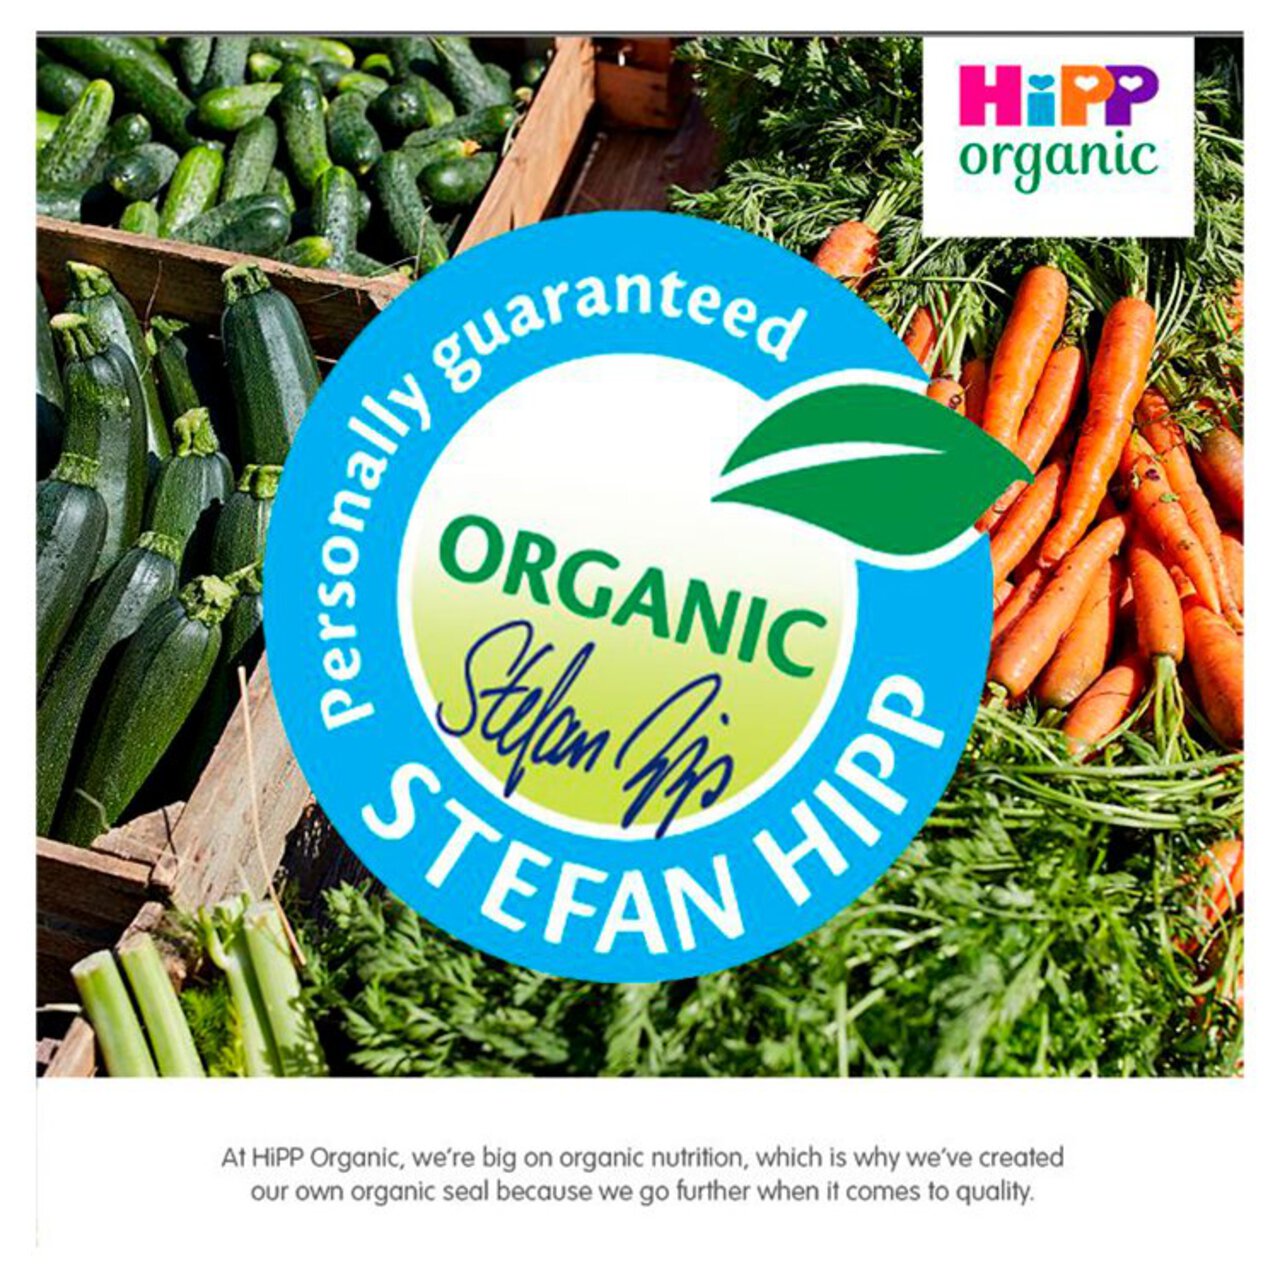 HiPP Organic Spaghetti Bolognese Baby Food Jar 7+ Months 190g